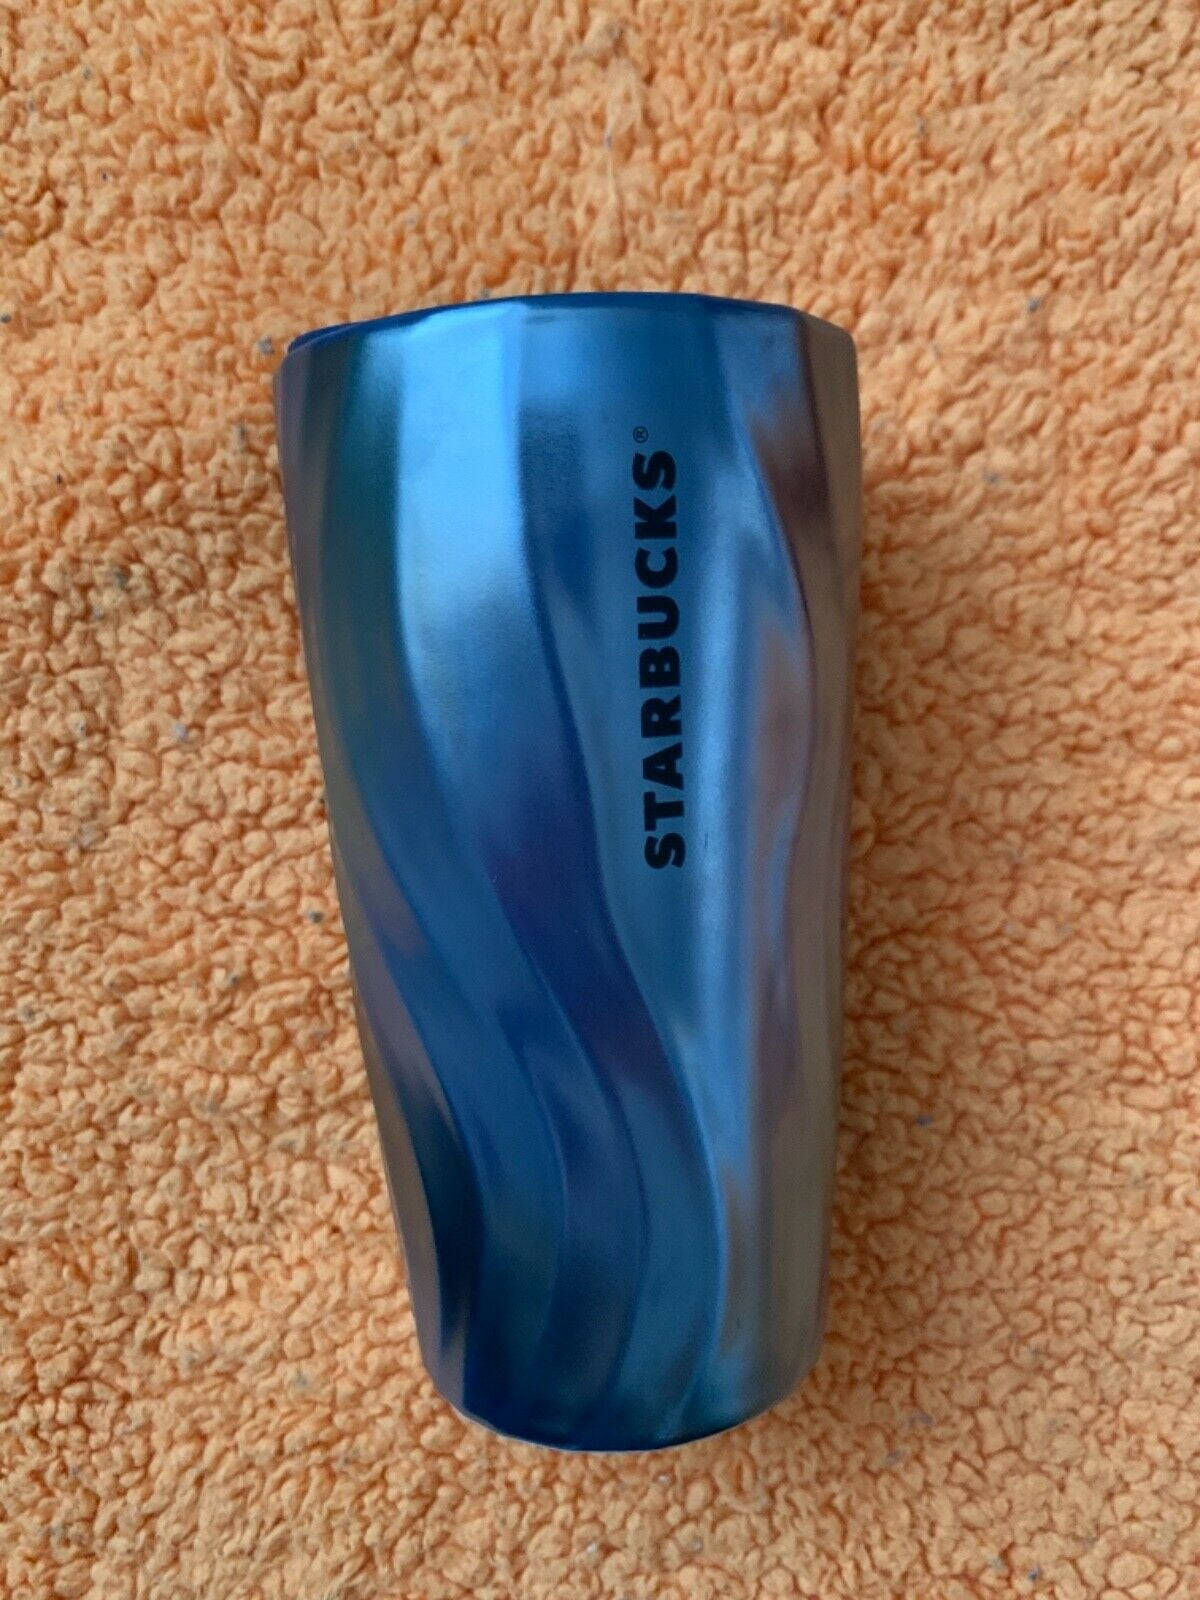 STARBUCKS Blue Teal Ceramic Mug Tumbler Cold Hot Coffee Cup with Lid, 12 oz  